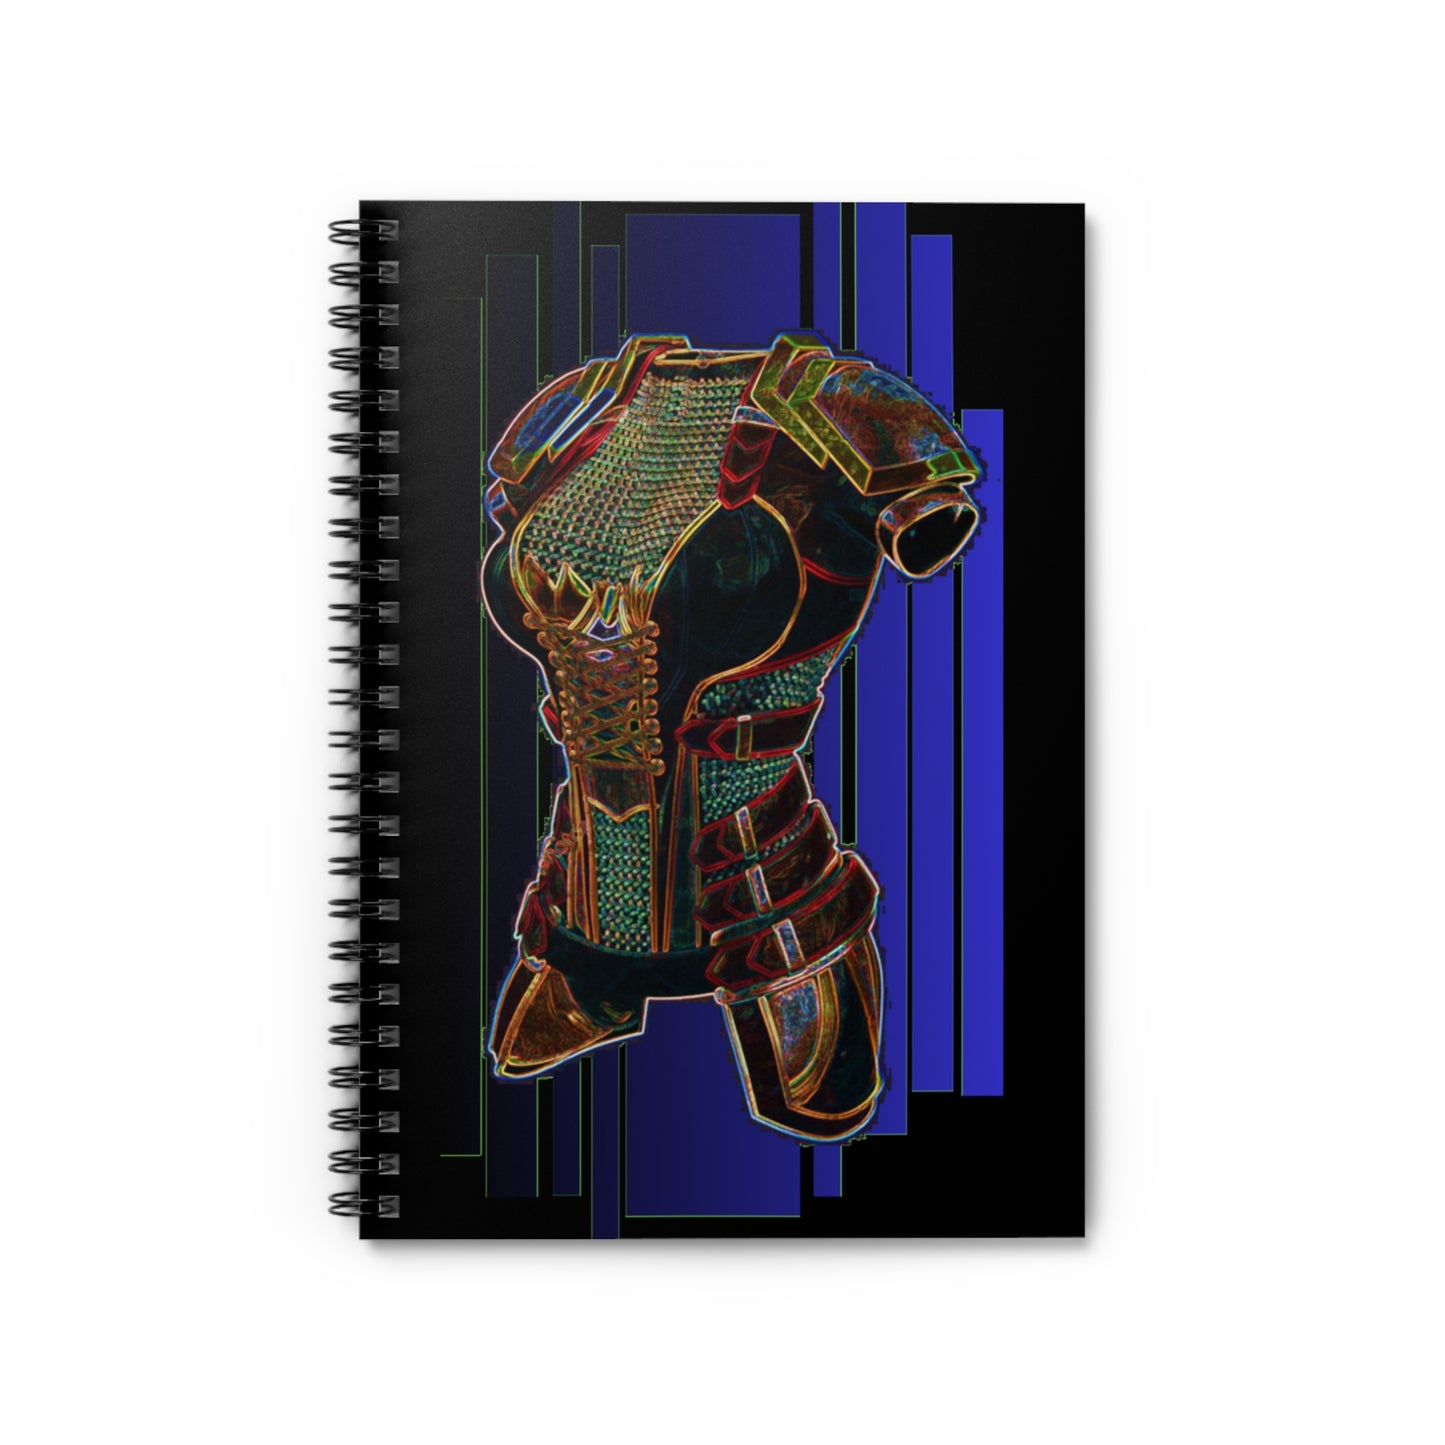 Female Elven Armor Spiral Notebook - Ruled Line